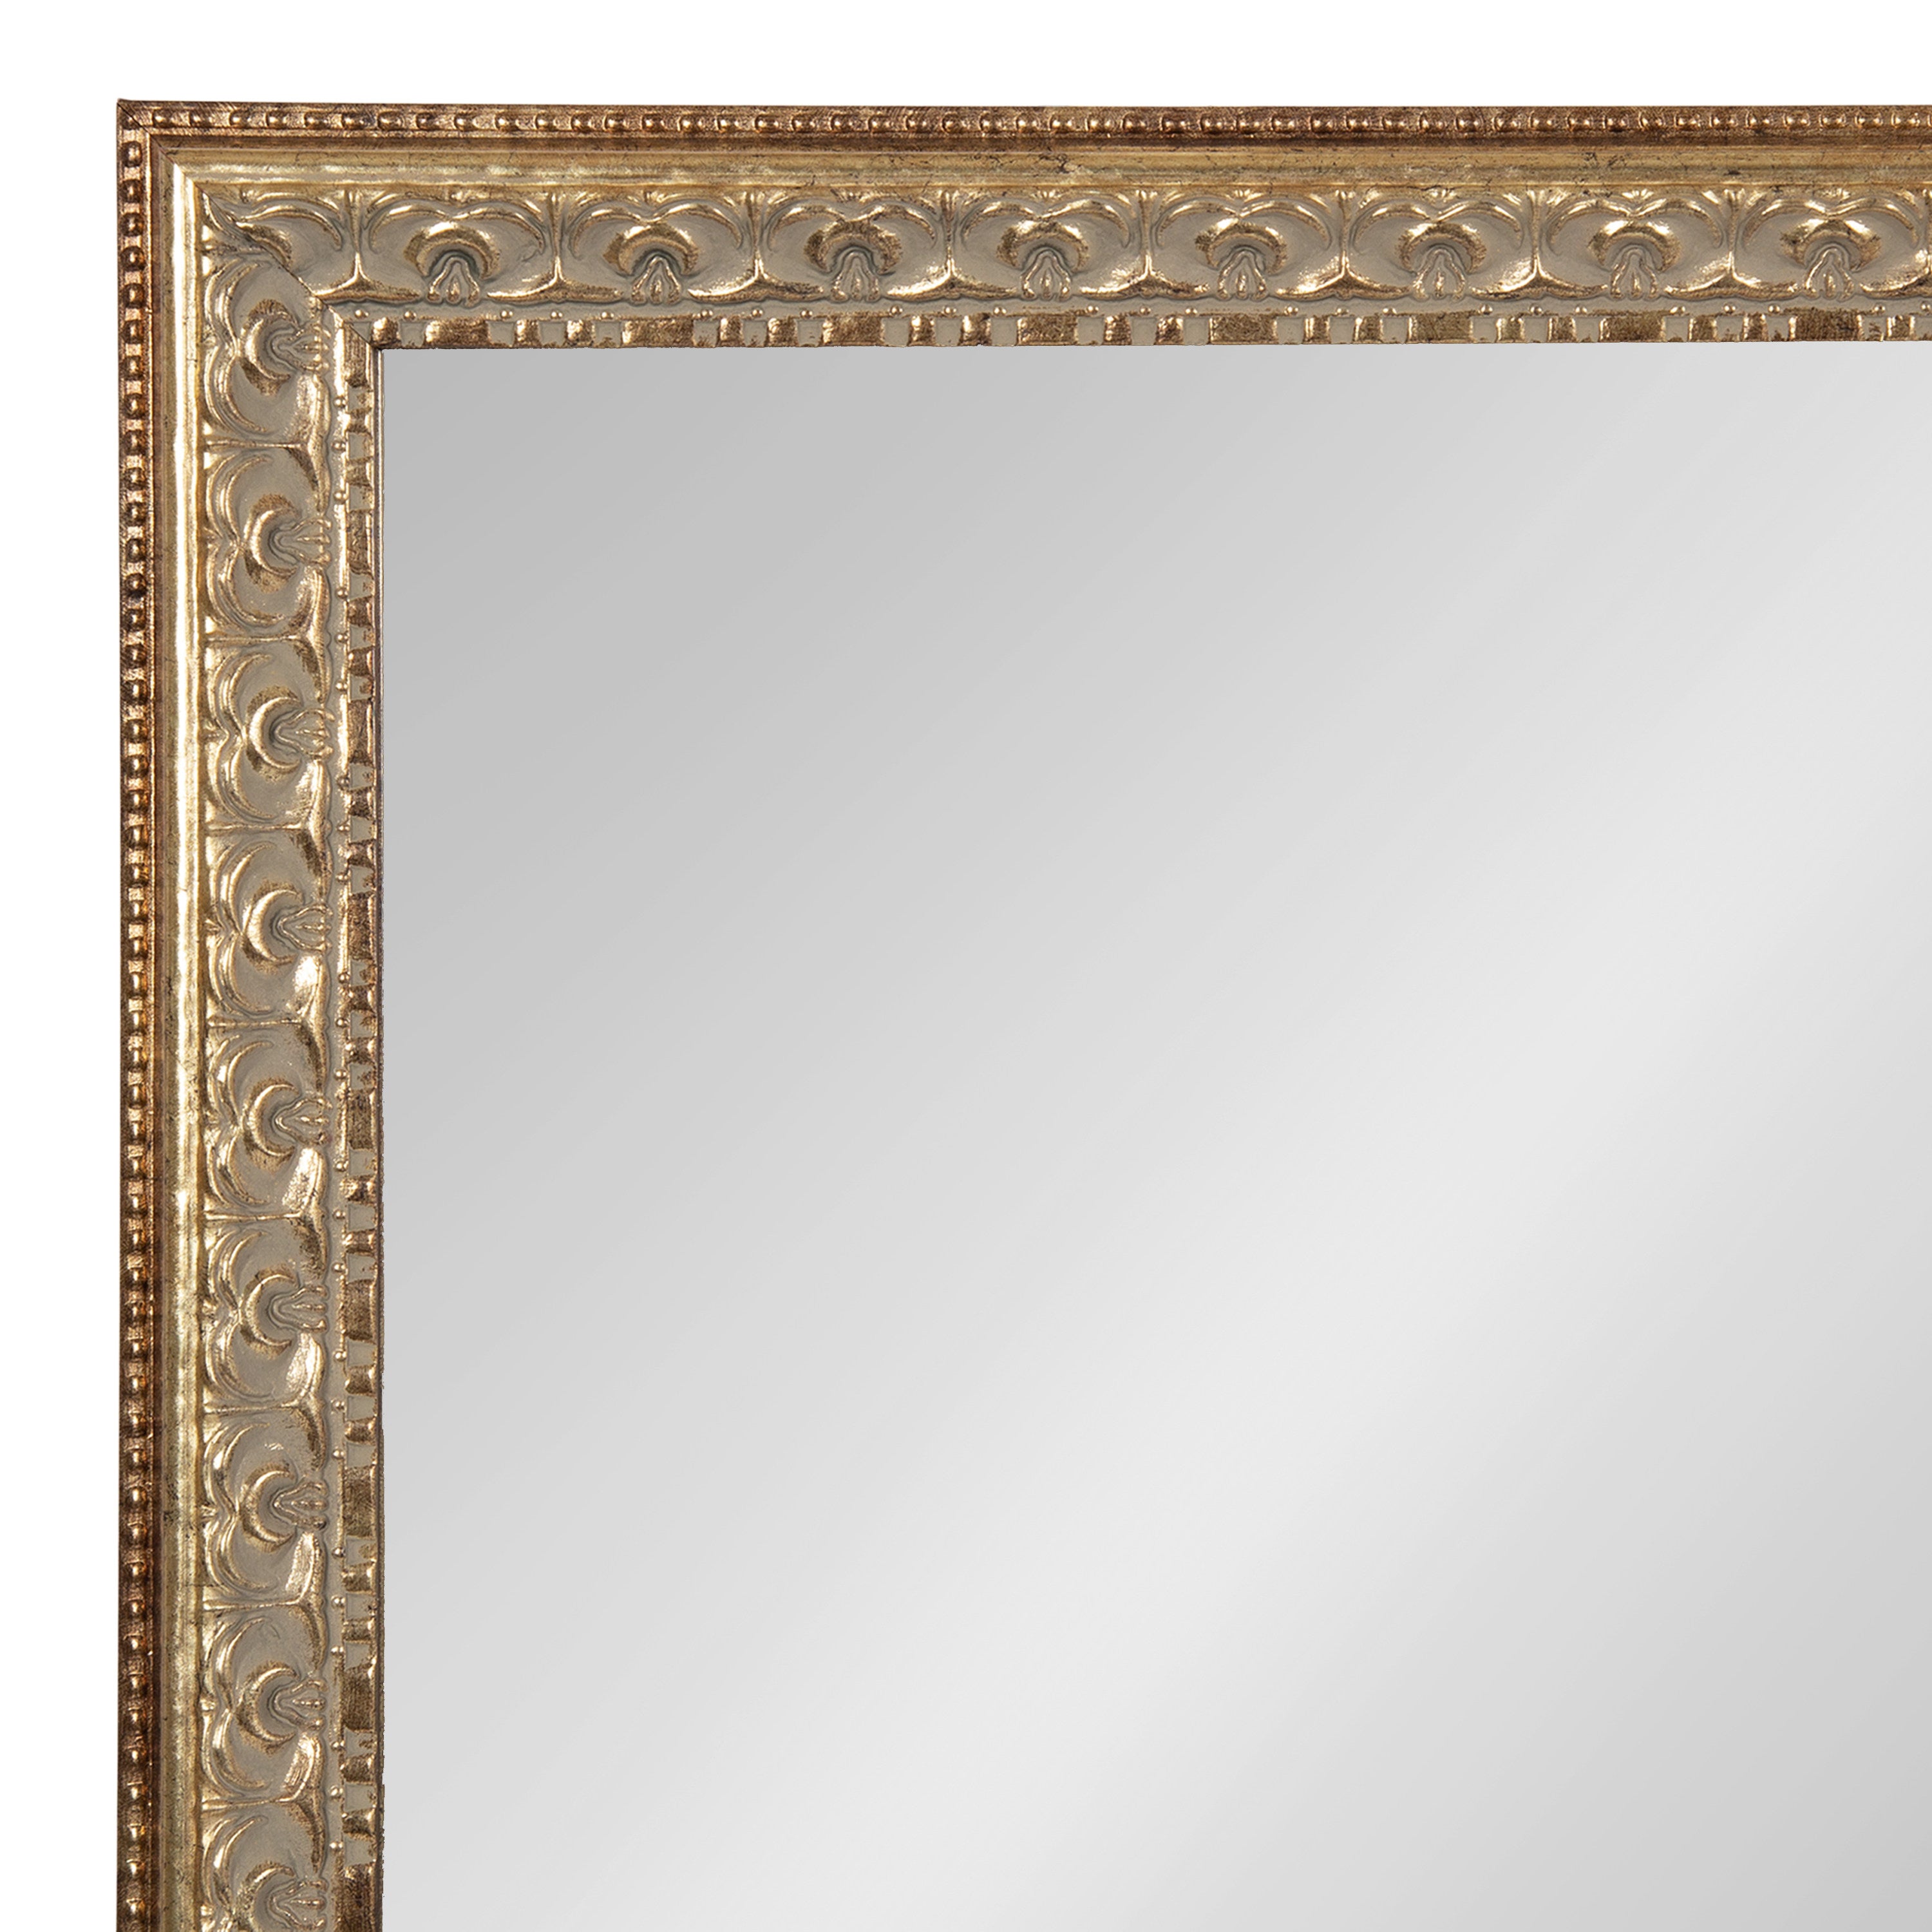 Johann Rectangle Wall Mirror